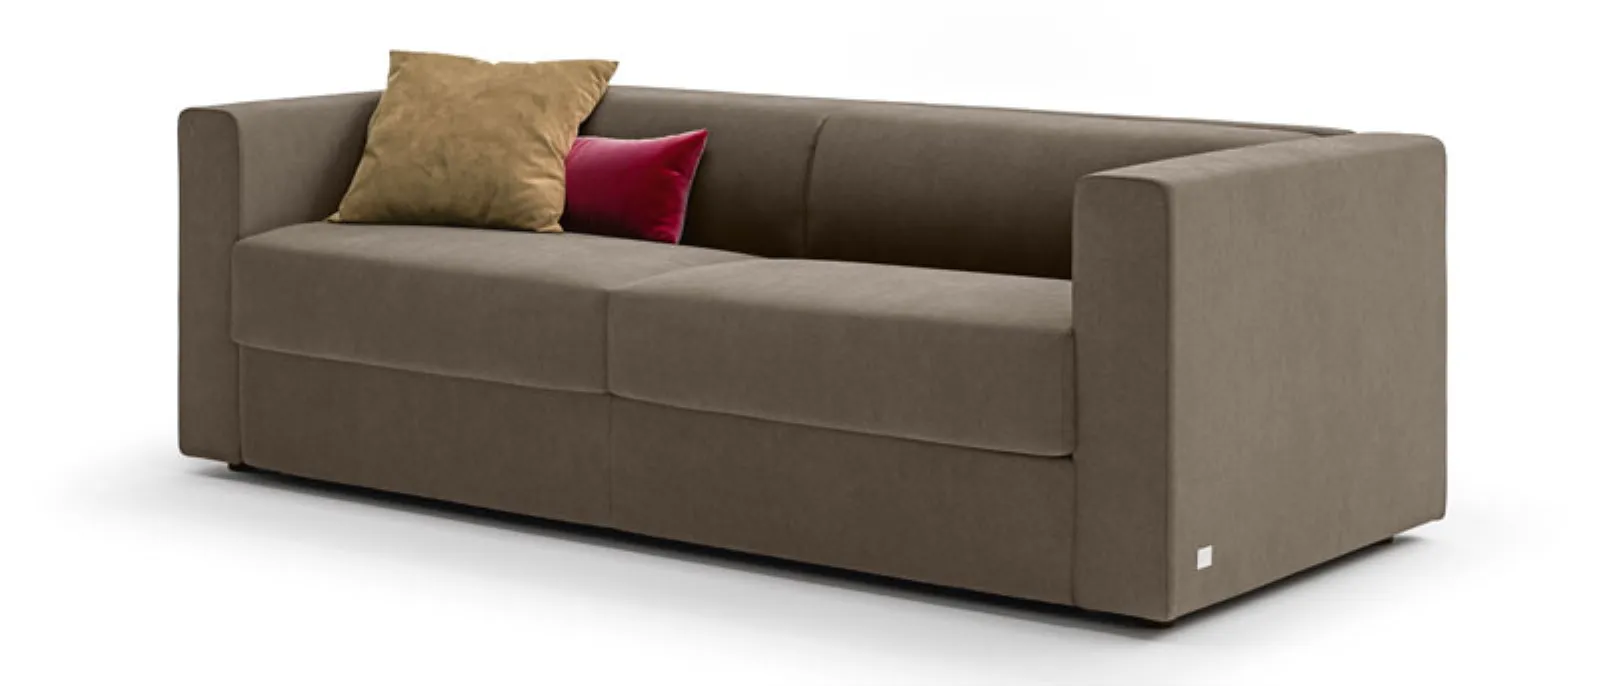 low sofa bed